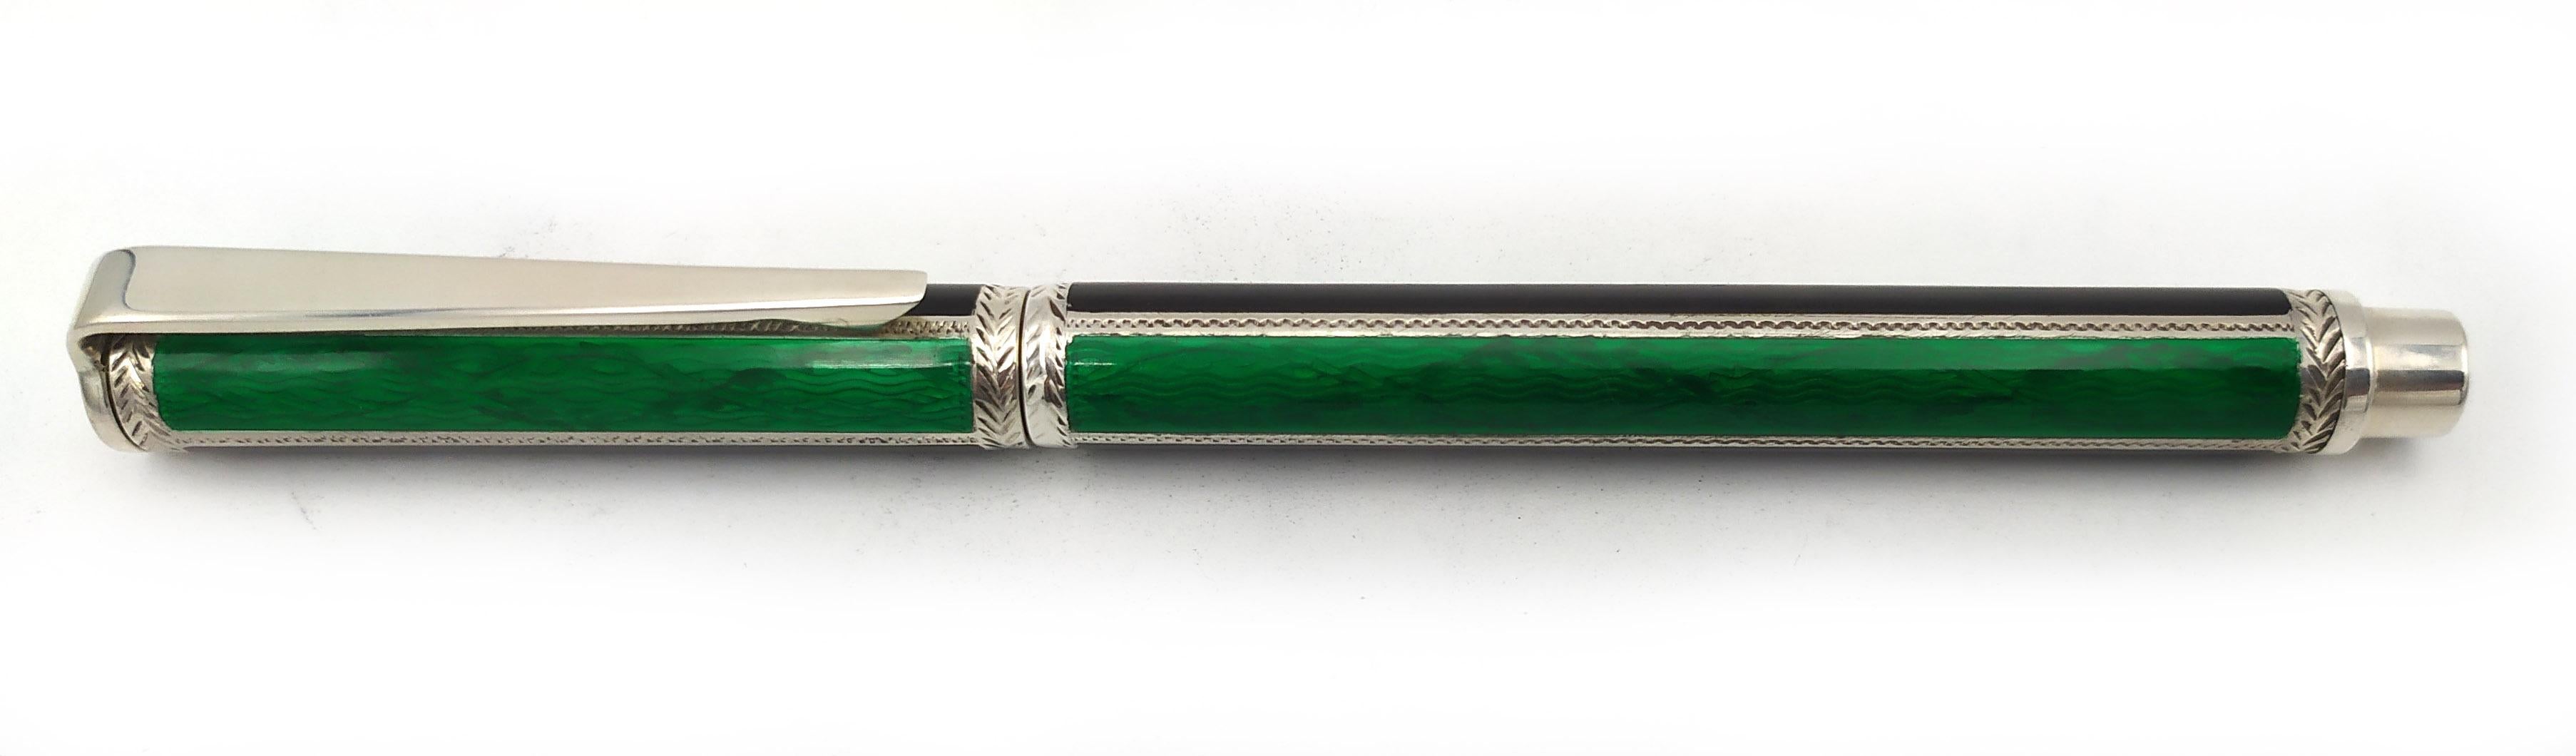 Fountain pen, Ballpoint pen and tray for a Desk Set green enamel Salimbeni  For Sale 5